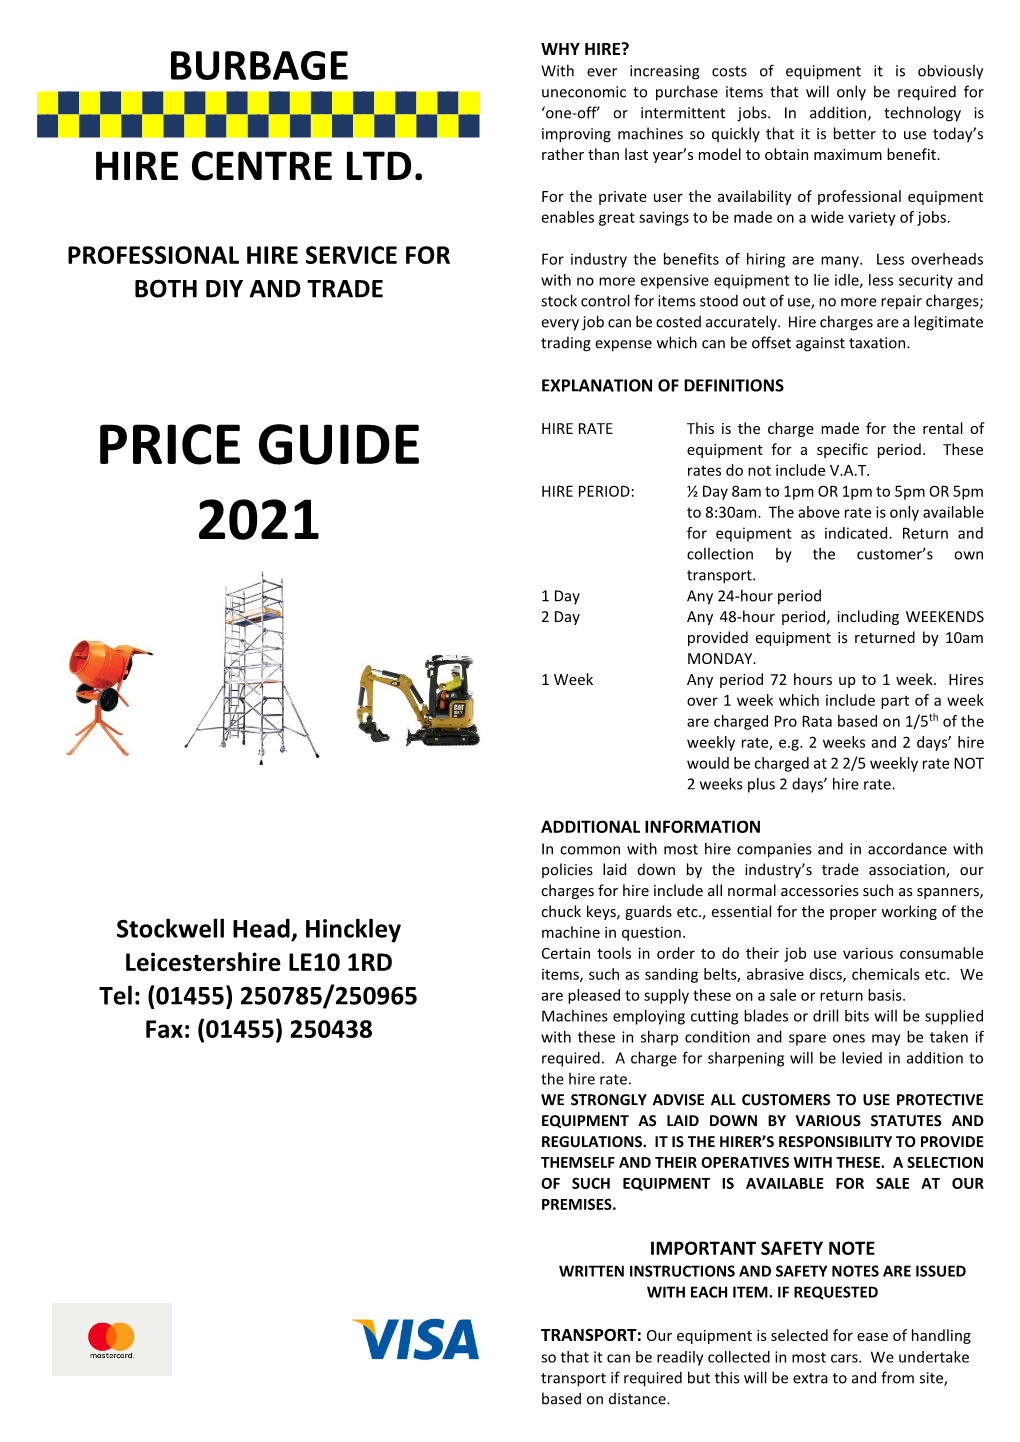 Price Guide 2021